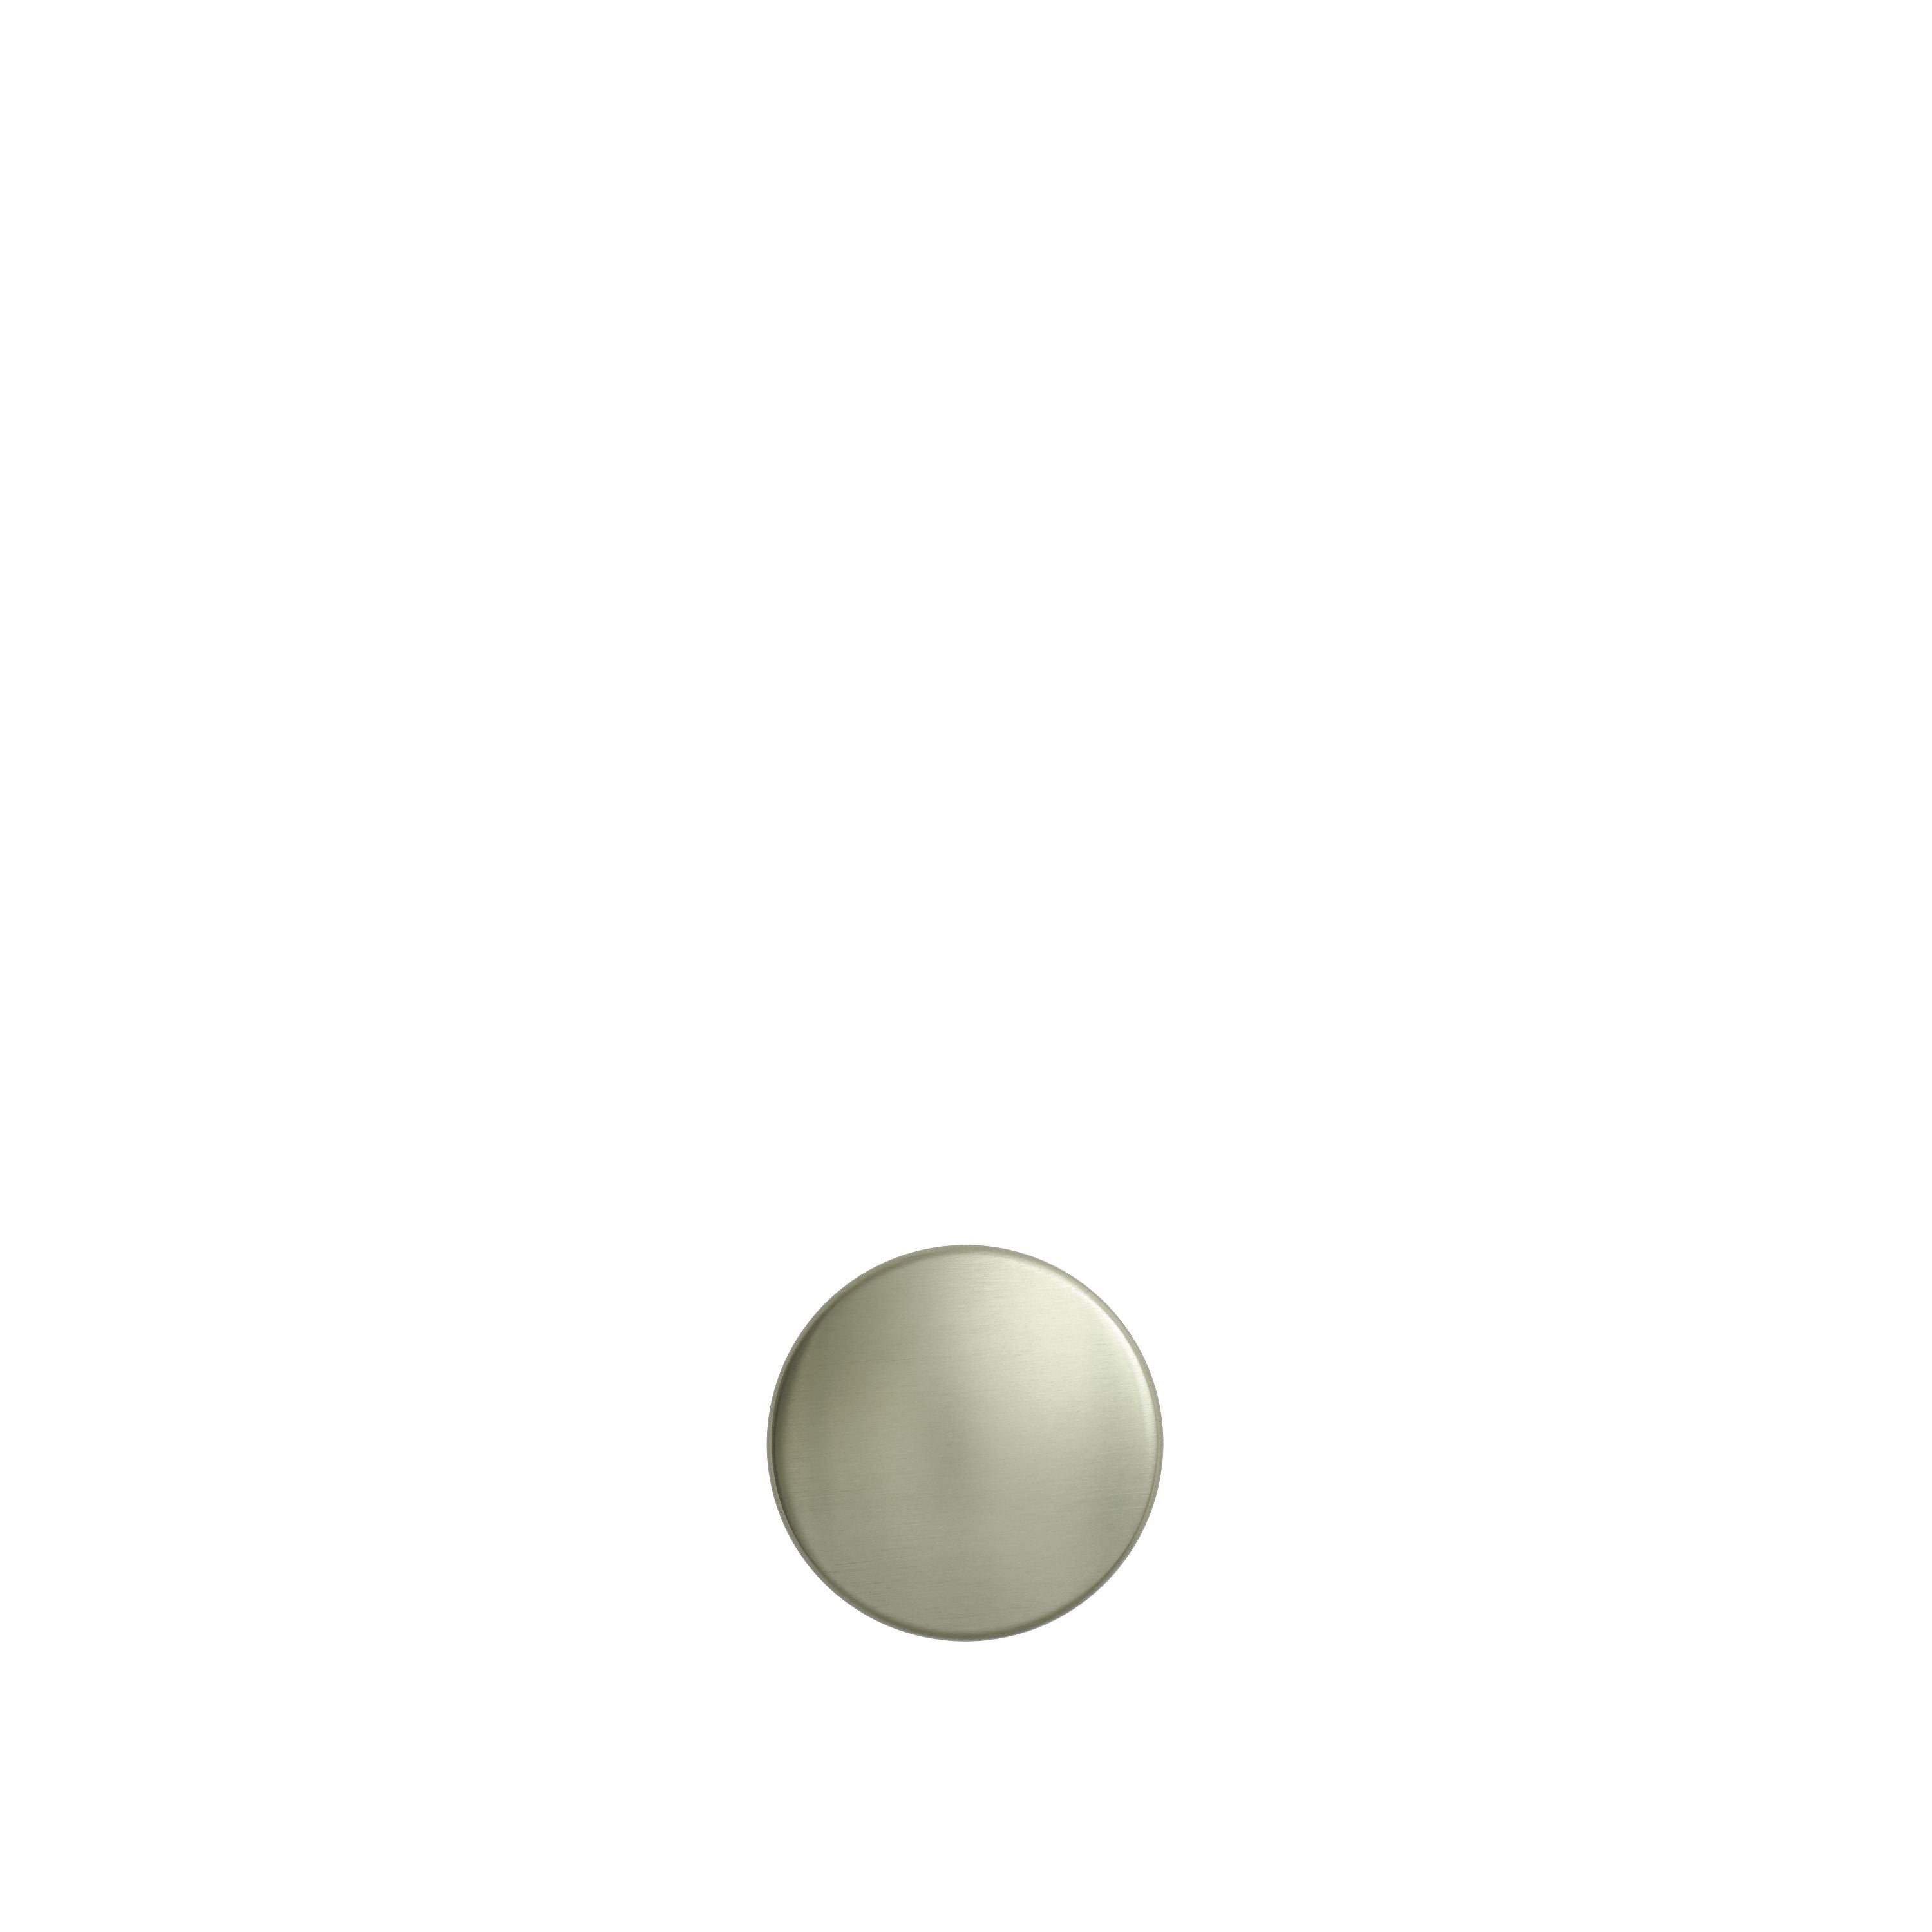 Muuto punti in metallo verde chiaro, Ø 3,9 cm